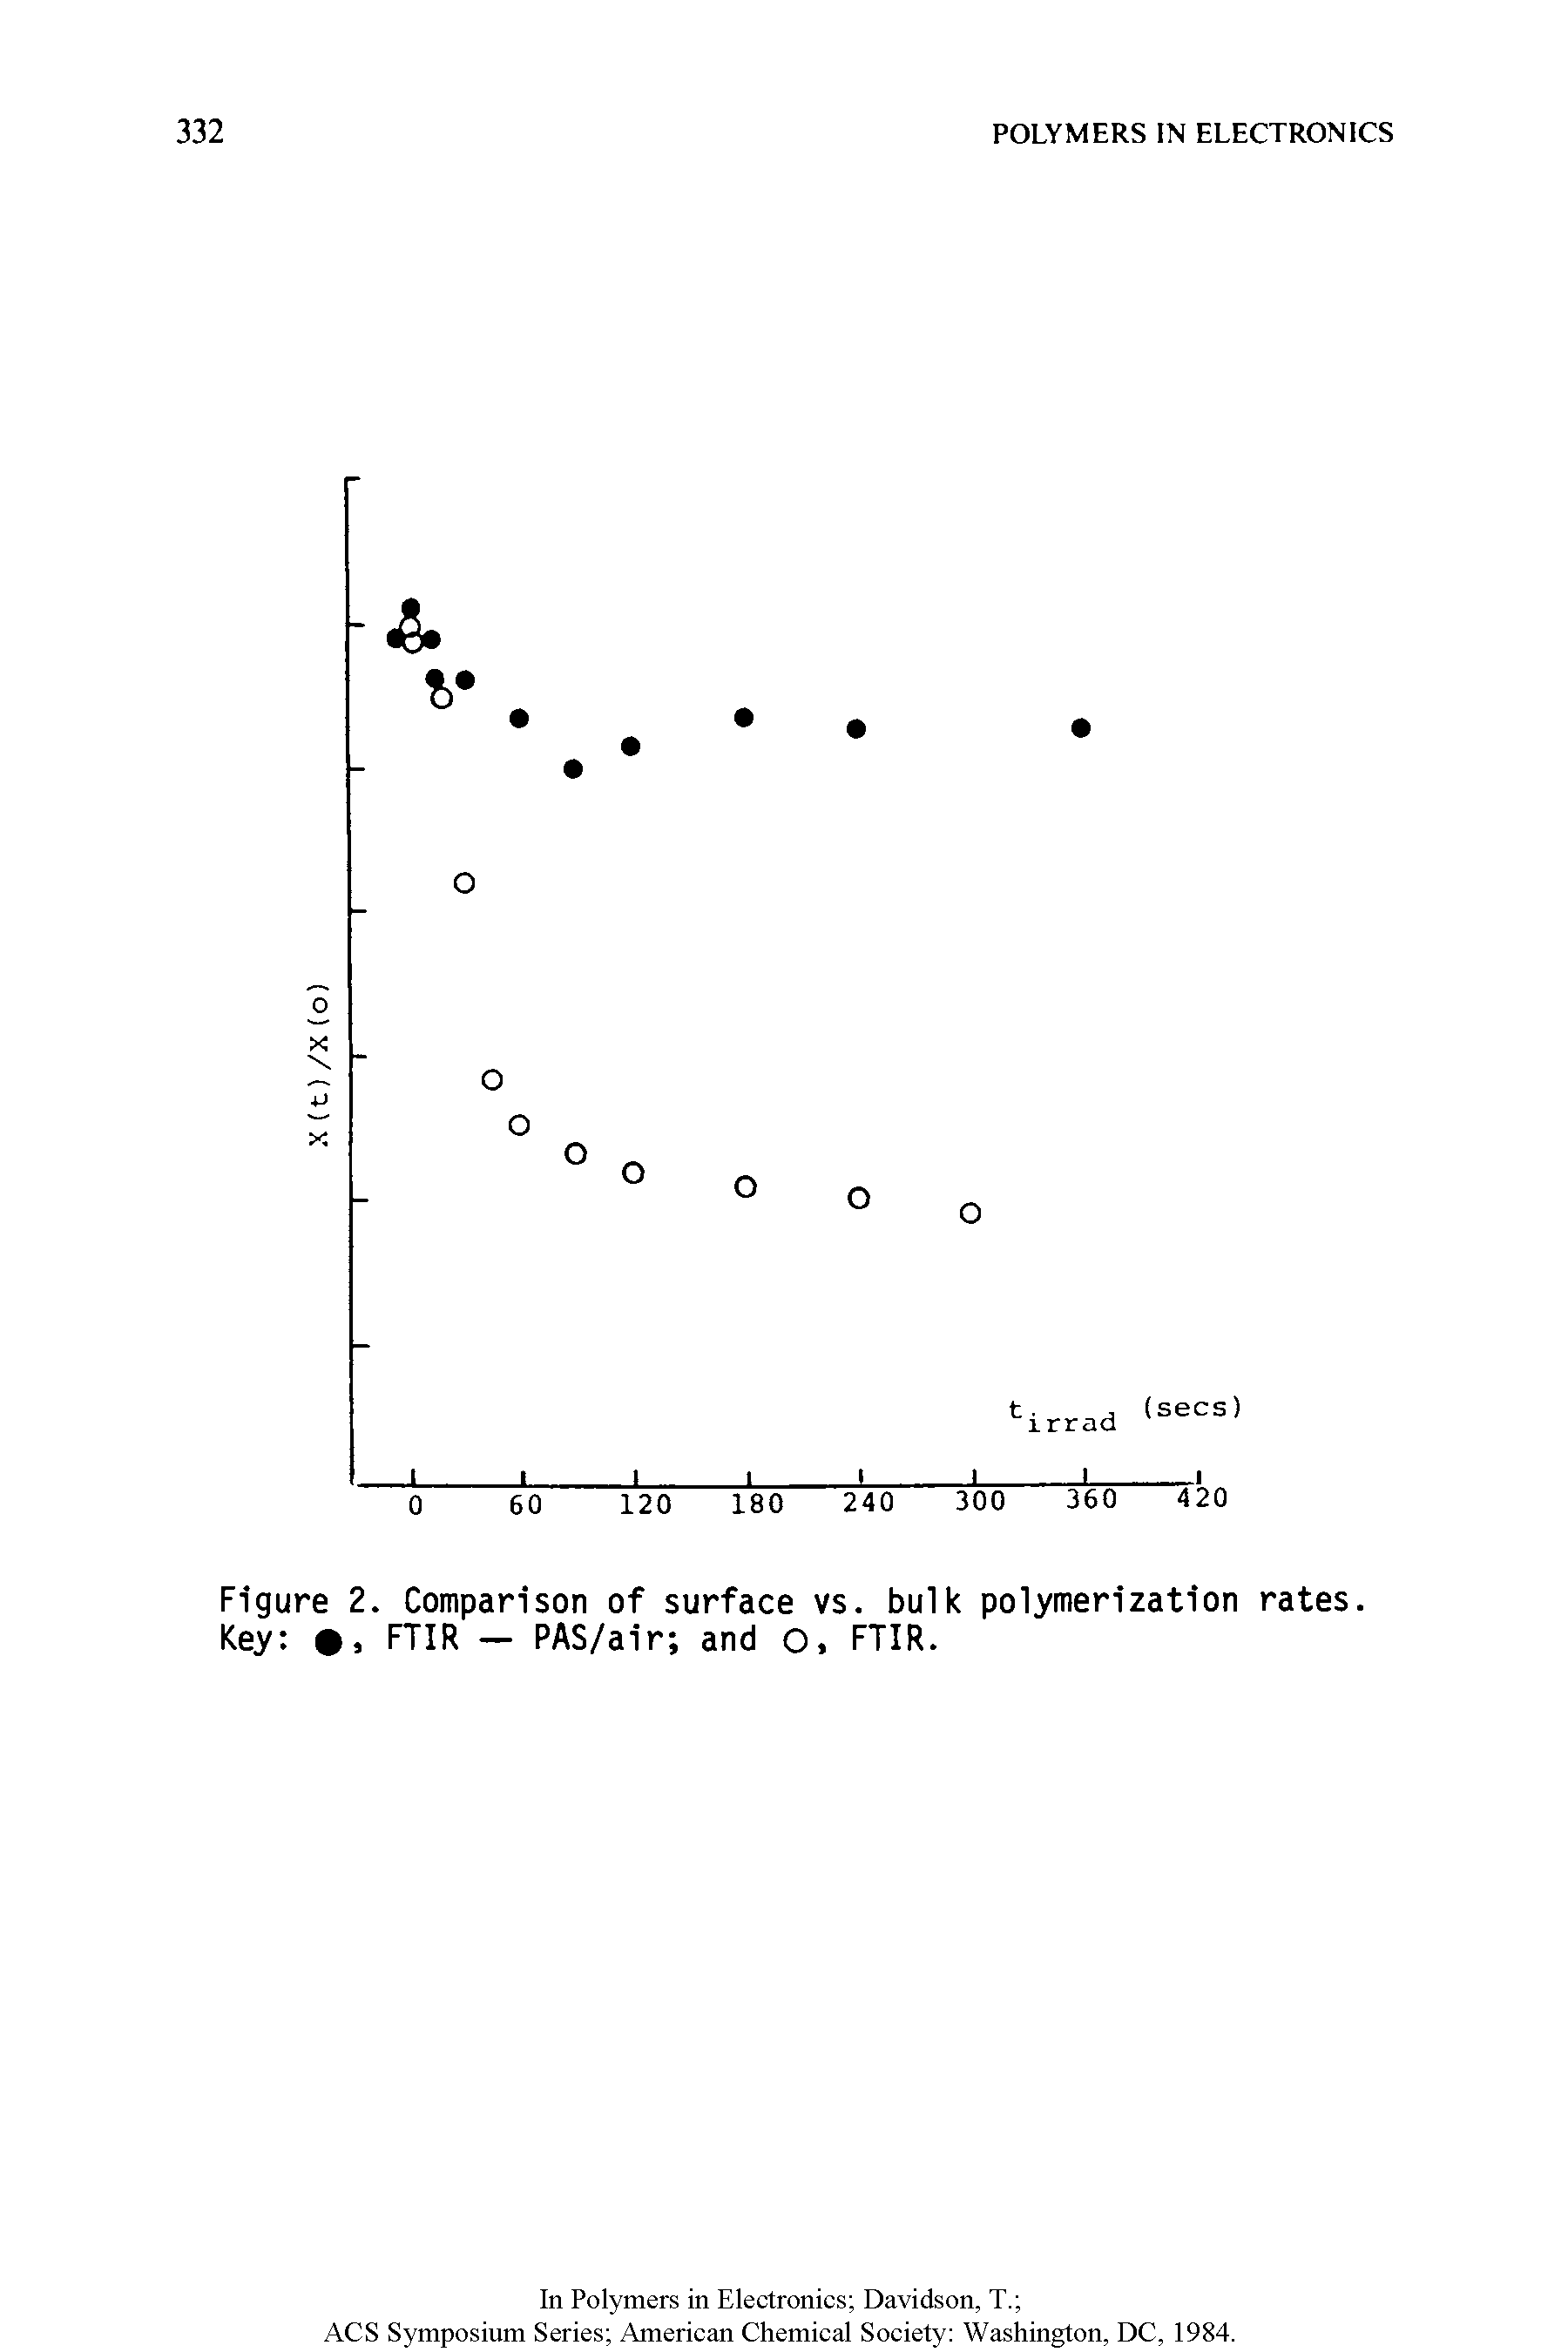 Figure 2. Comparison of surface vs. bulk polymerization rates. Key , FTIR — PAS/air and O. FTIR.